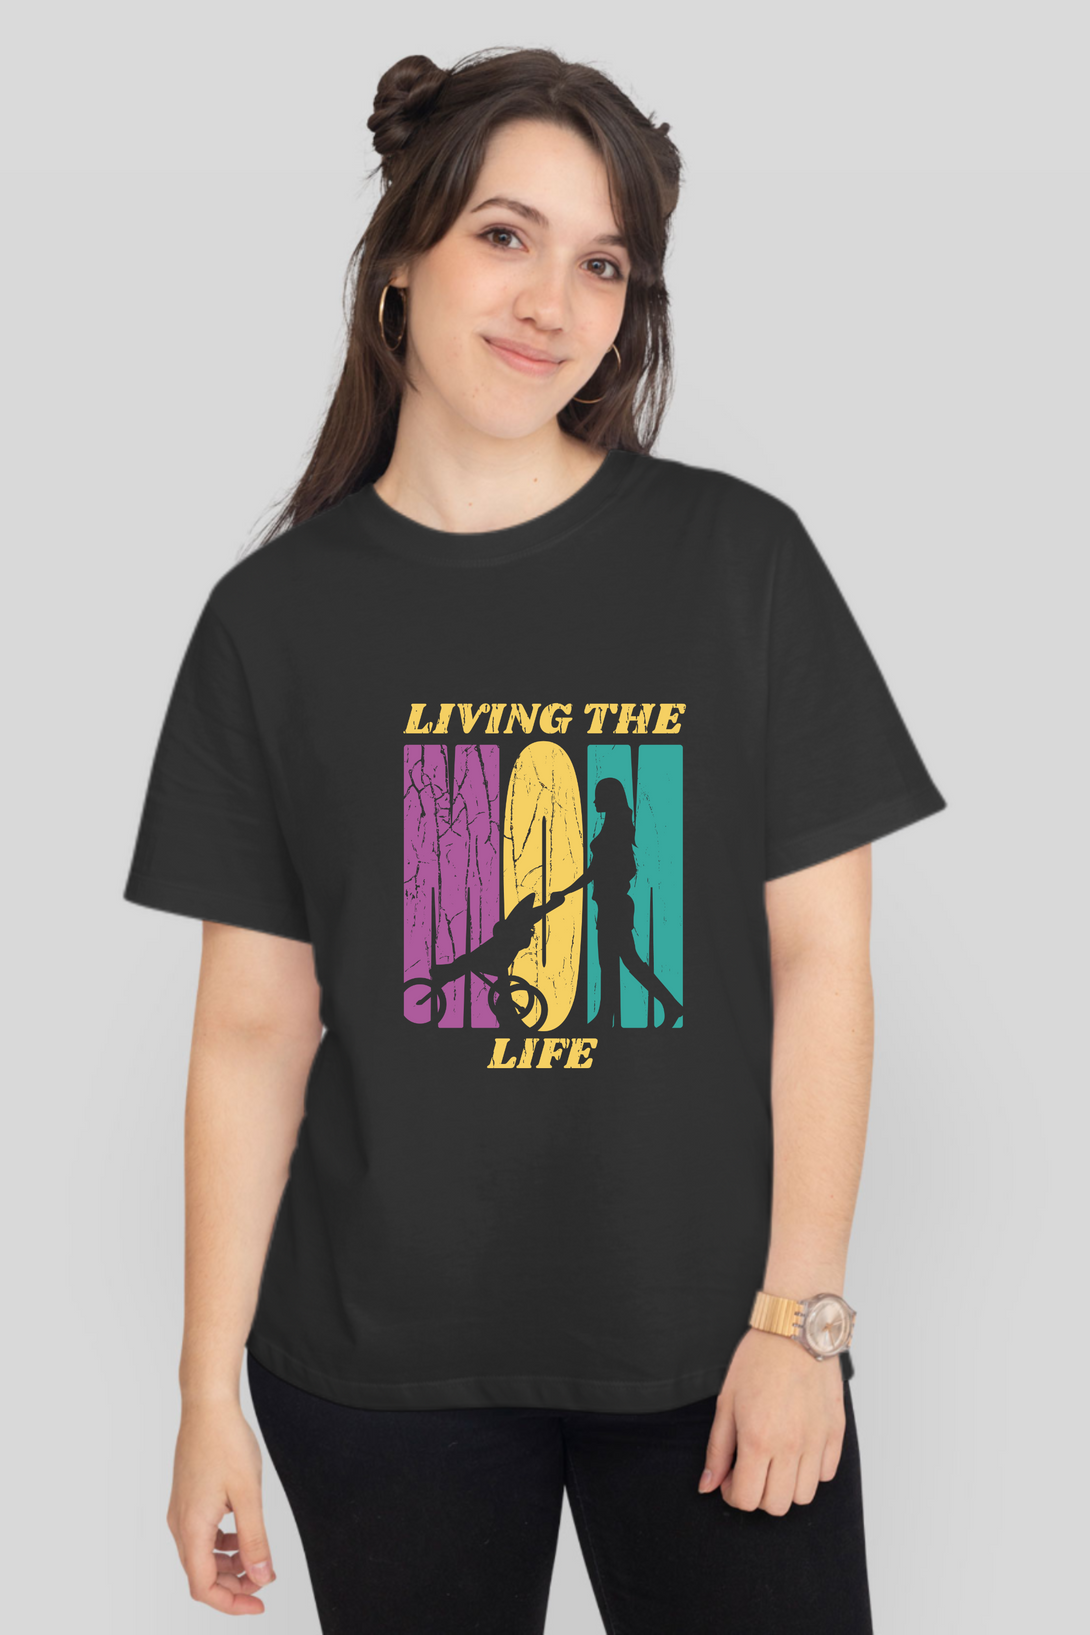 Mom Life Journey Printed T-Shirt For Women - WowWaves - 13